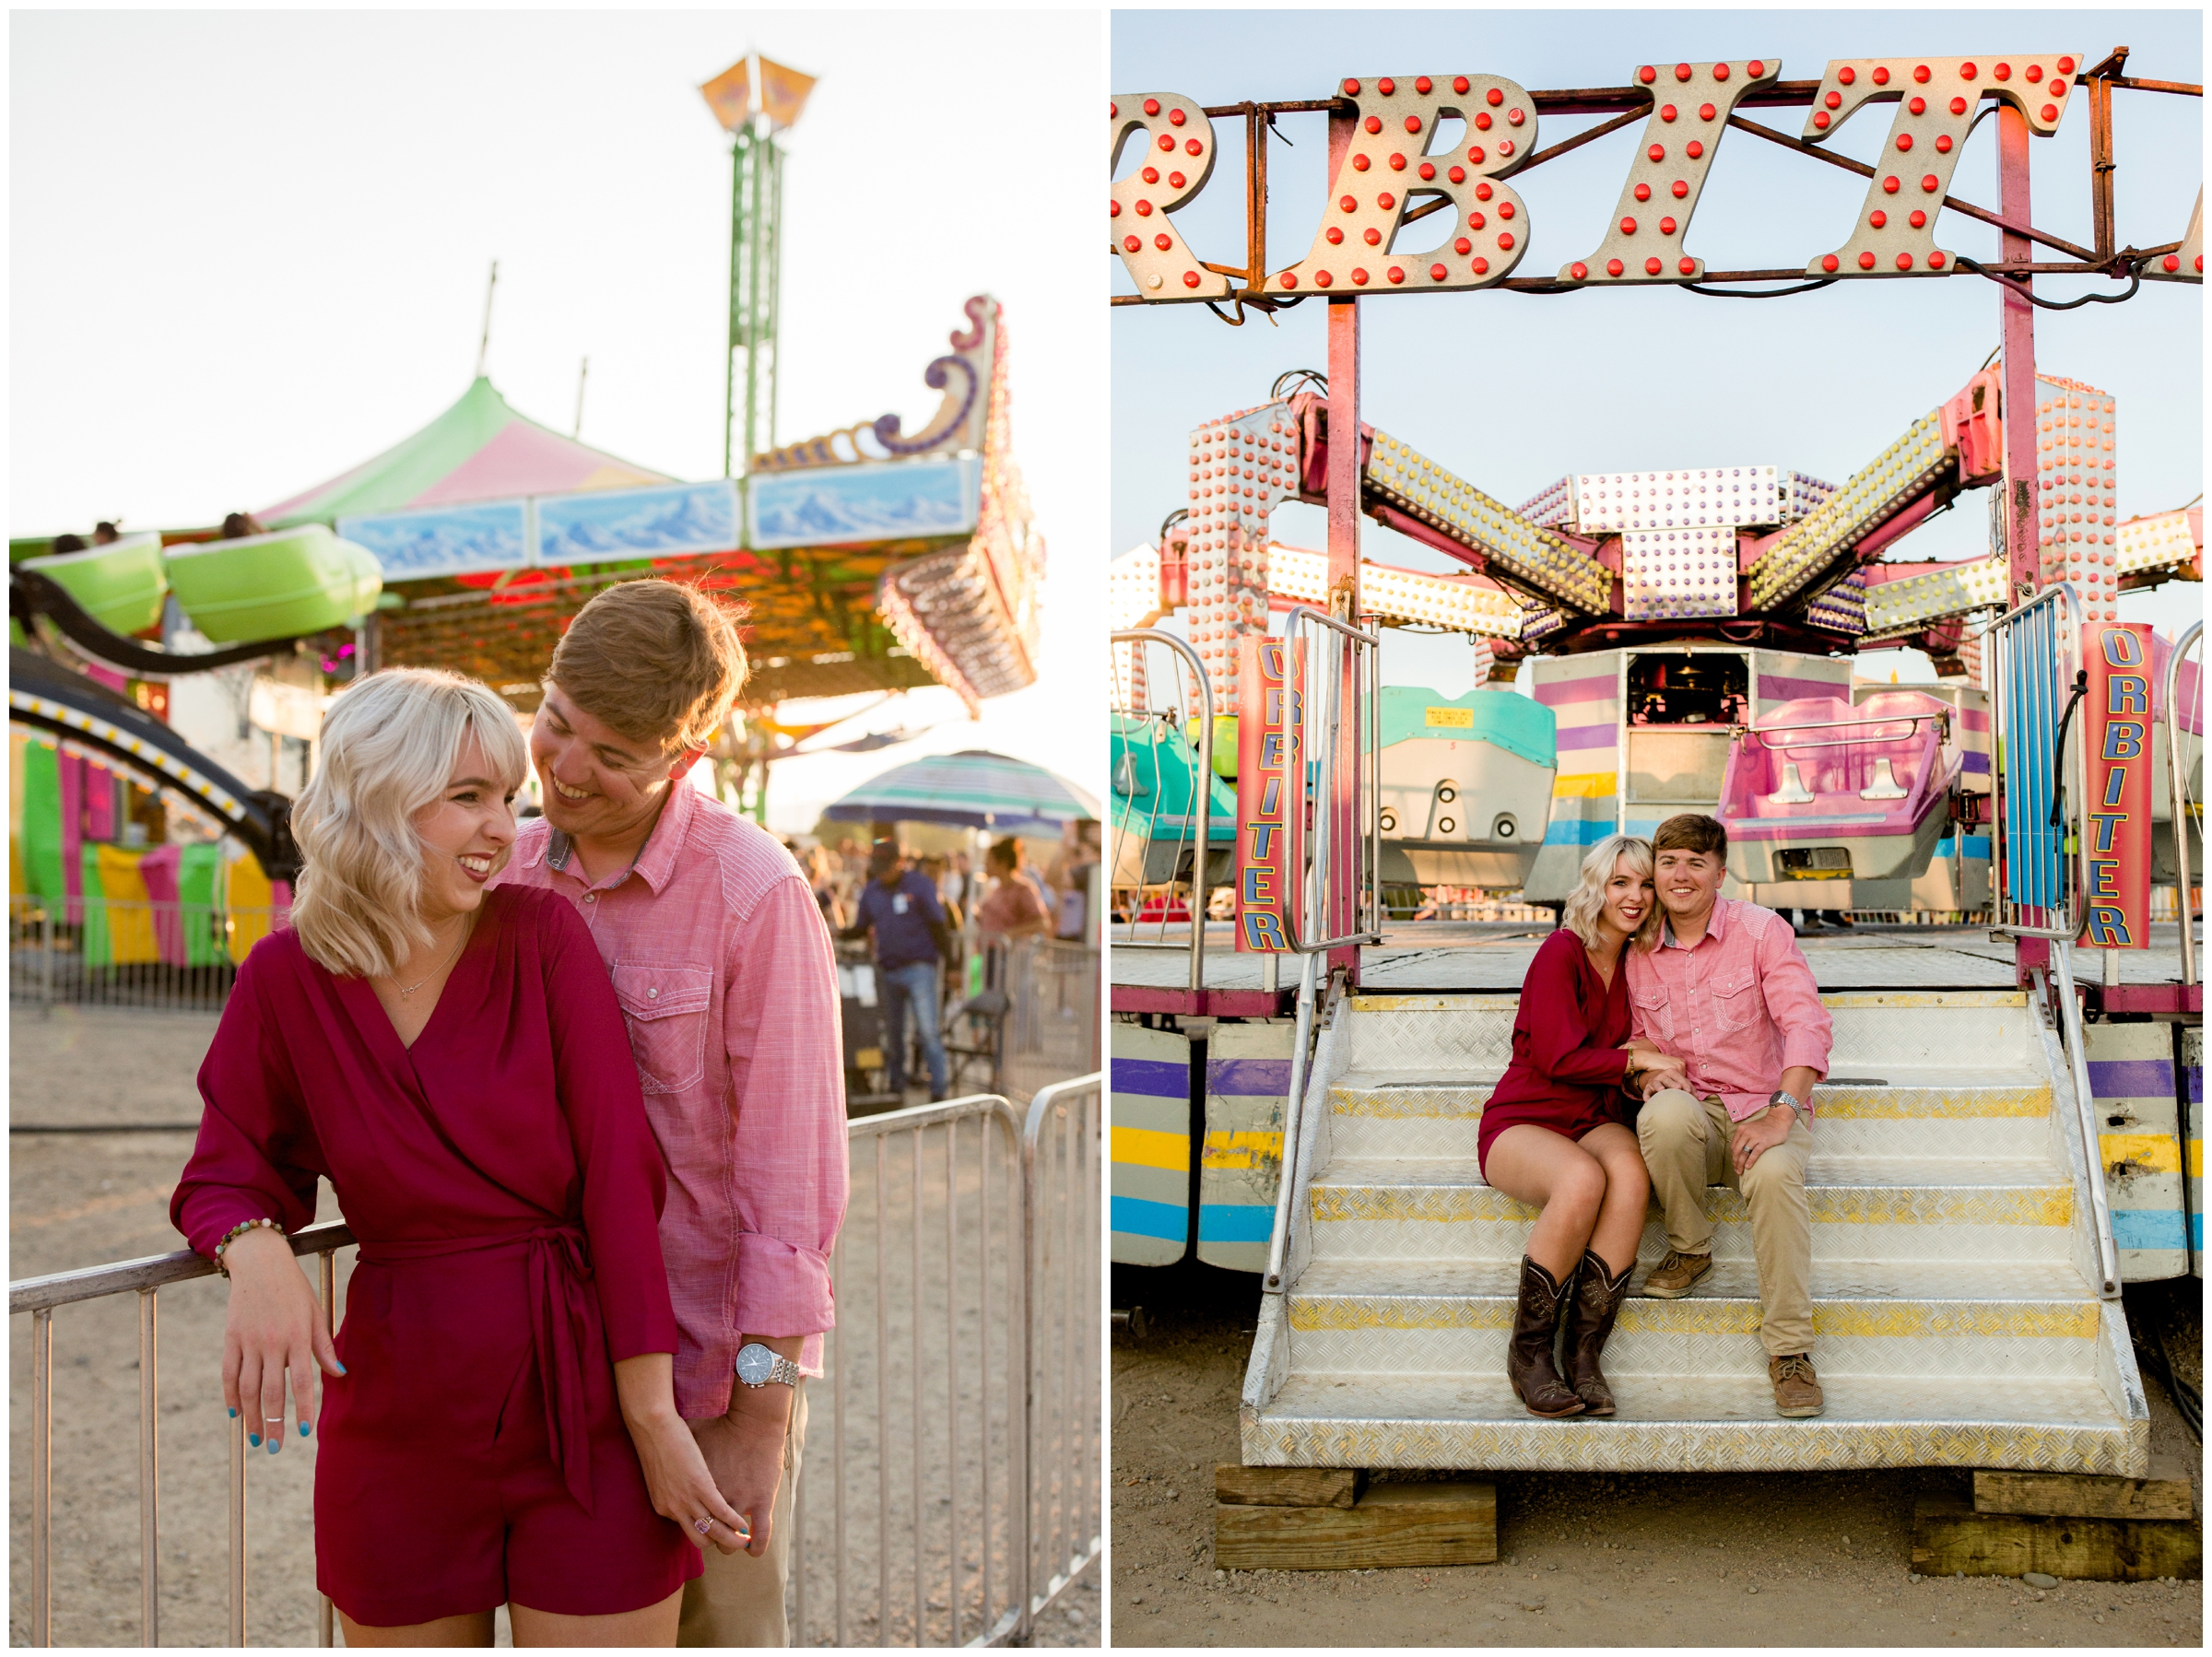 carnival engagement photo inspiration by Longmont Colorado photographer Plum Pretty Photography 